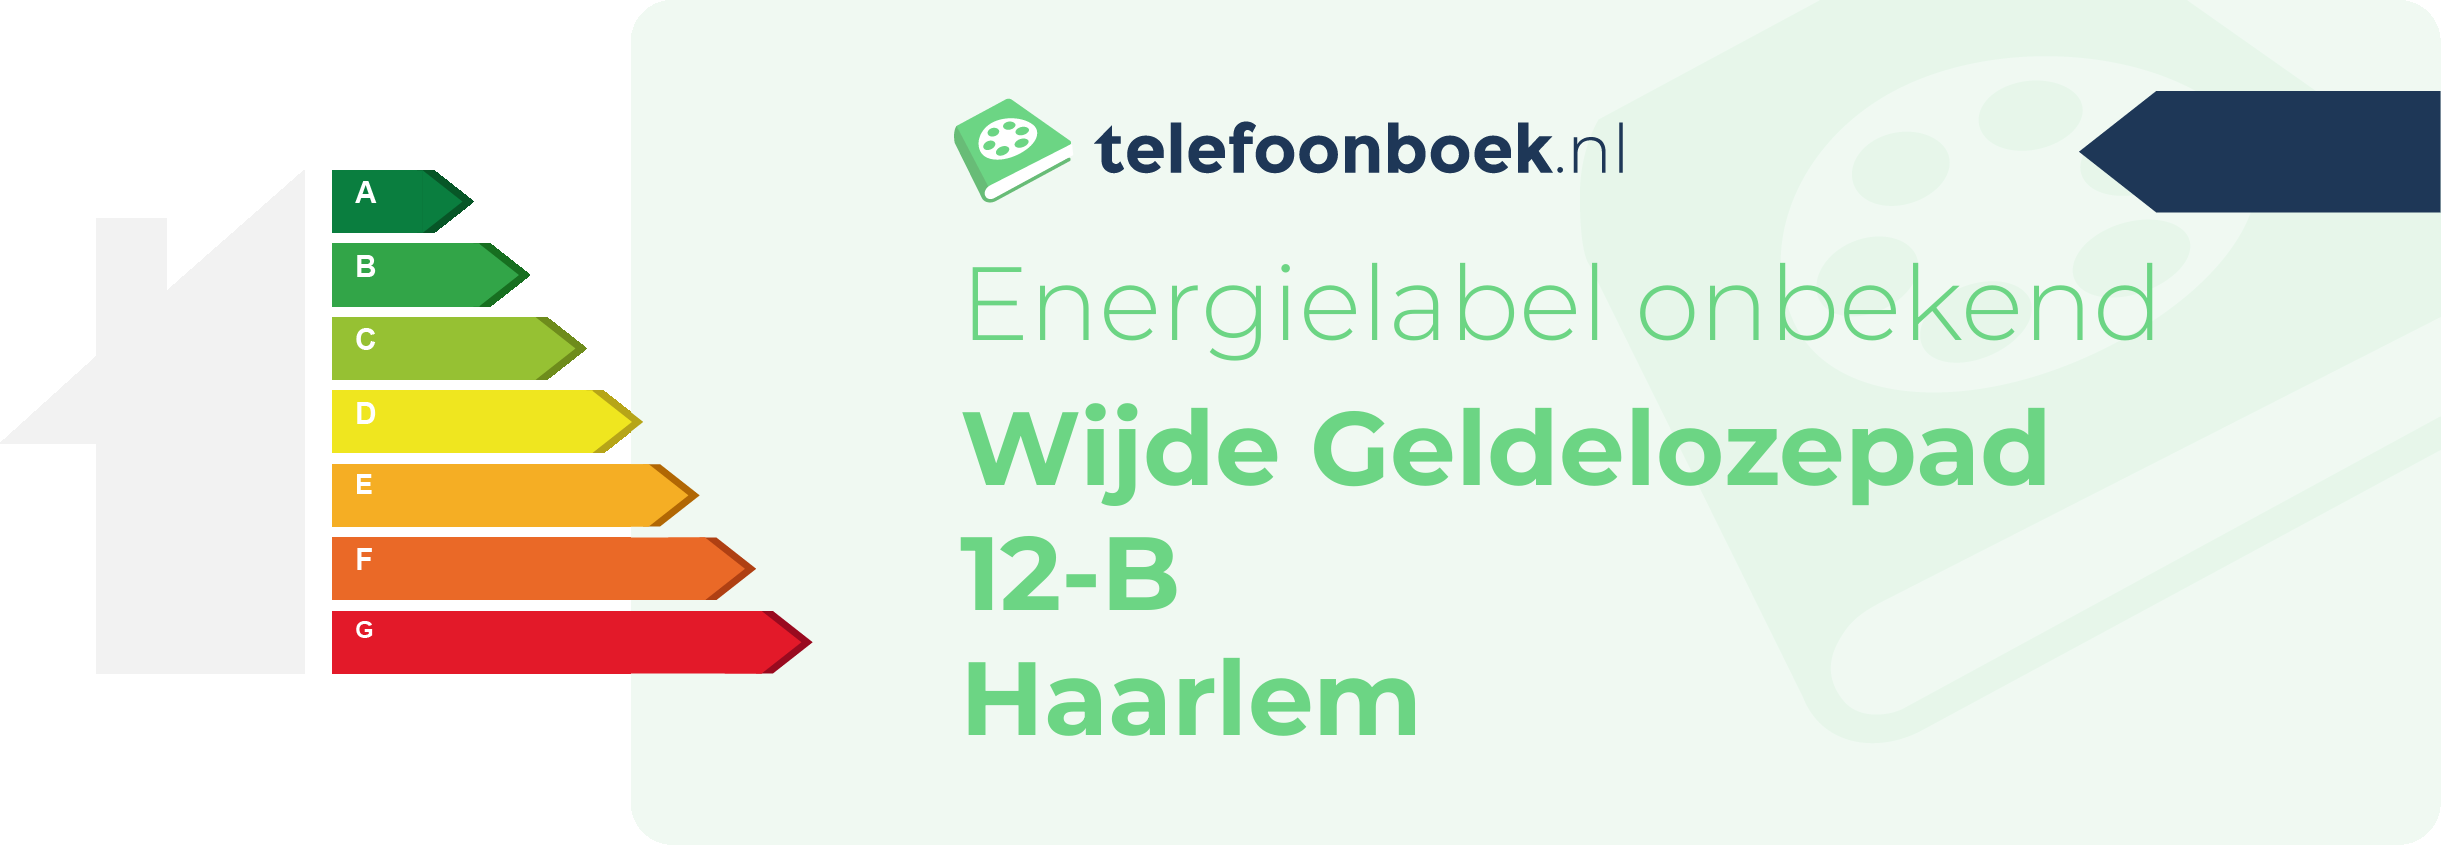 Energielabel Wijde Geldelozepad 12-B Haarlem